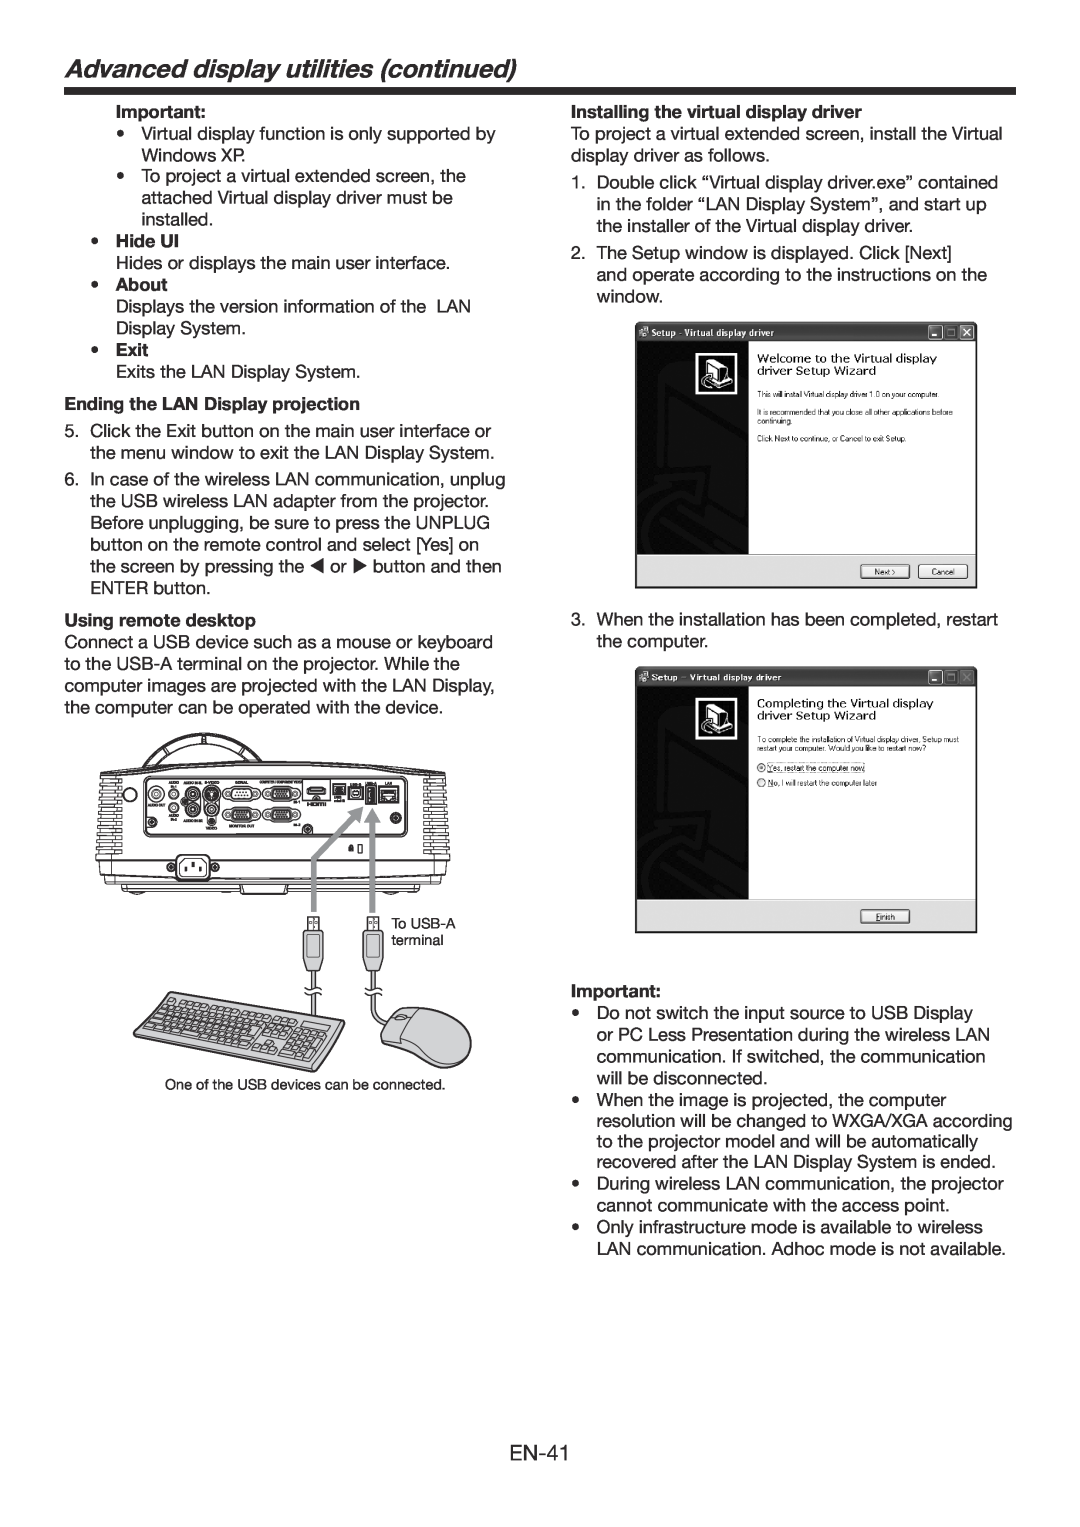 Mitsubishi Electronics WD385U-EST Advanced display utilities continued, Hide UI, About, Exit, Using remote desktop 